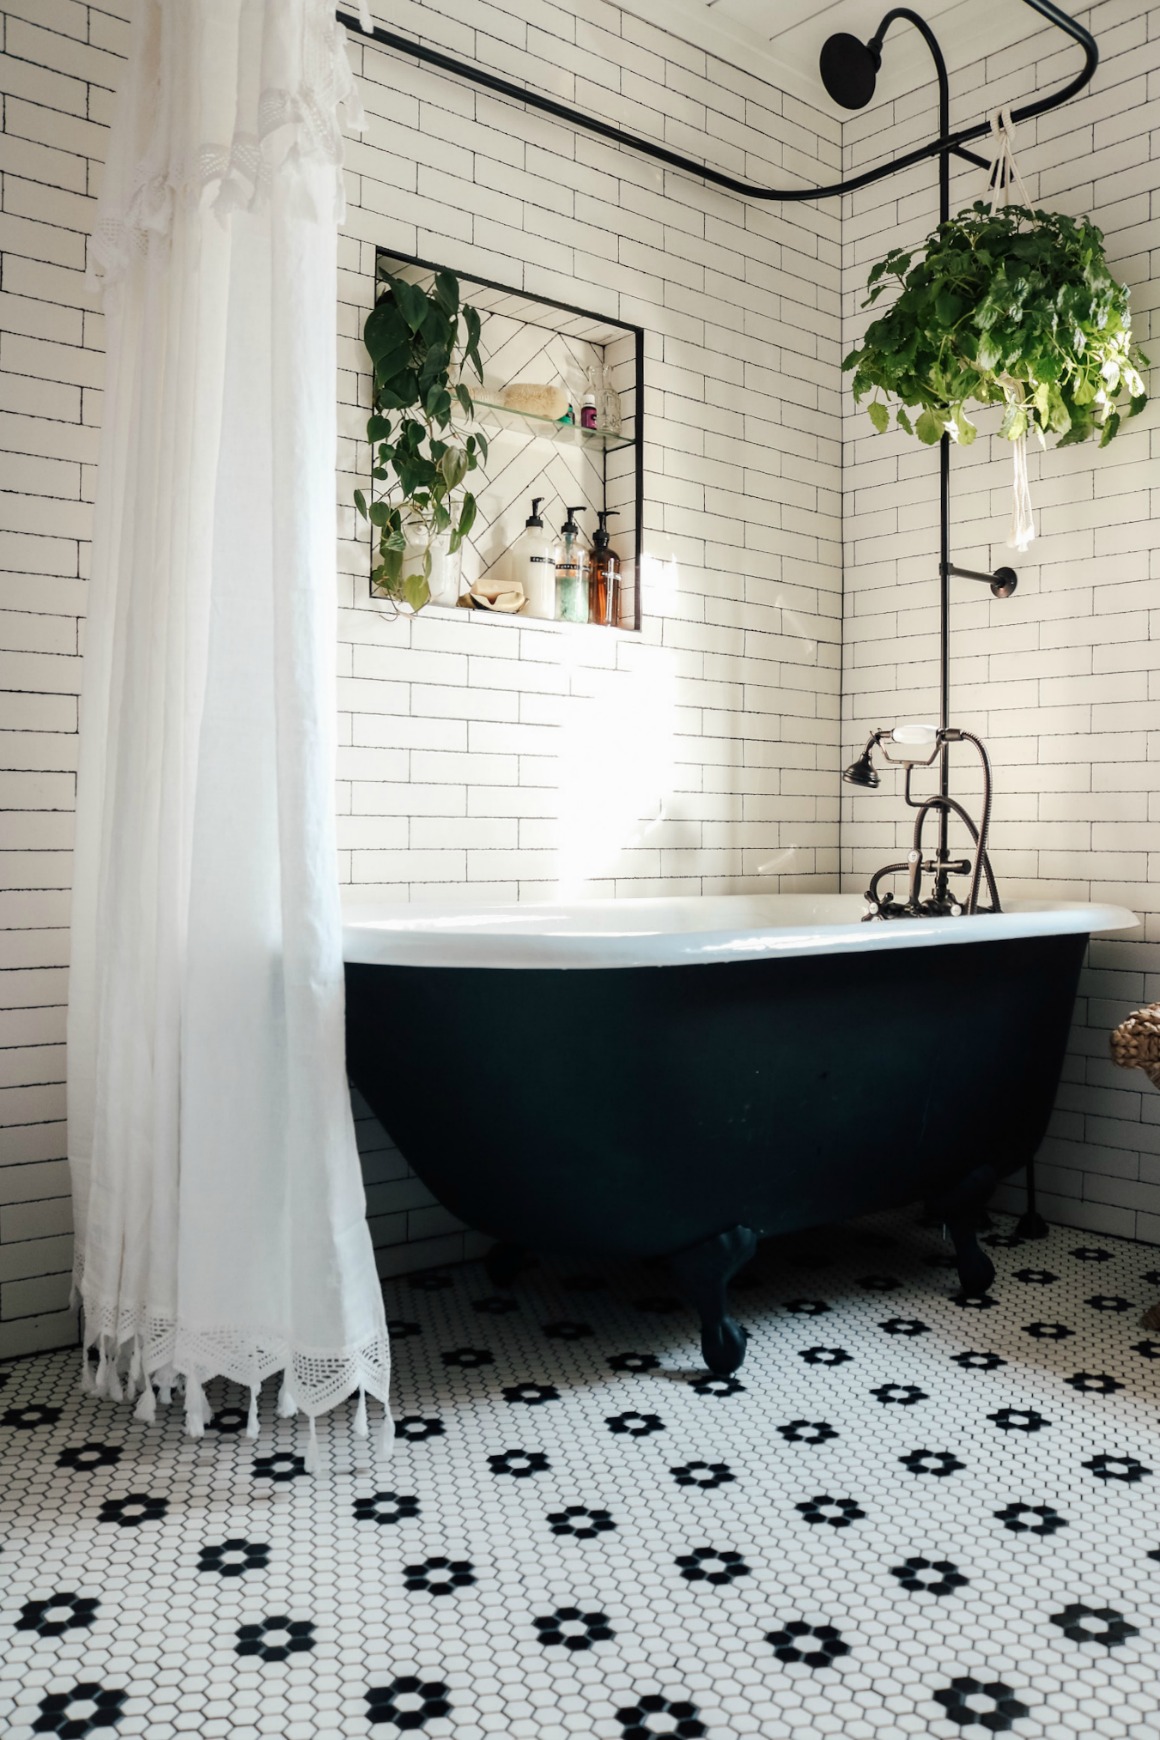 Master Bathroom Reveal With Claw Foot, Claw Bathtub With Shower